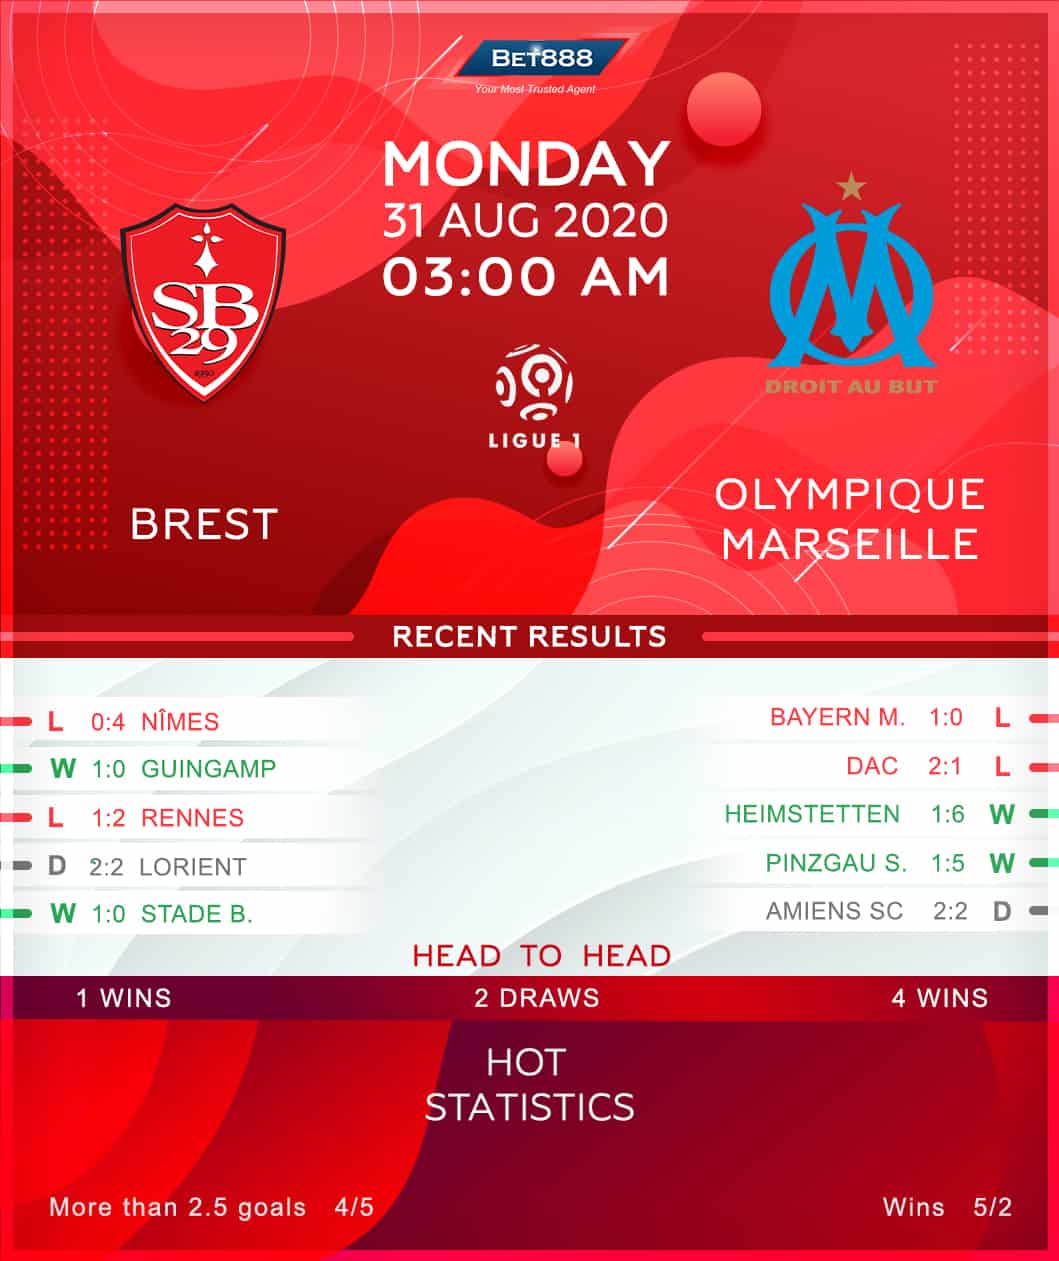 Brest vs Olympique Marseille 31/08/20